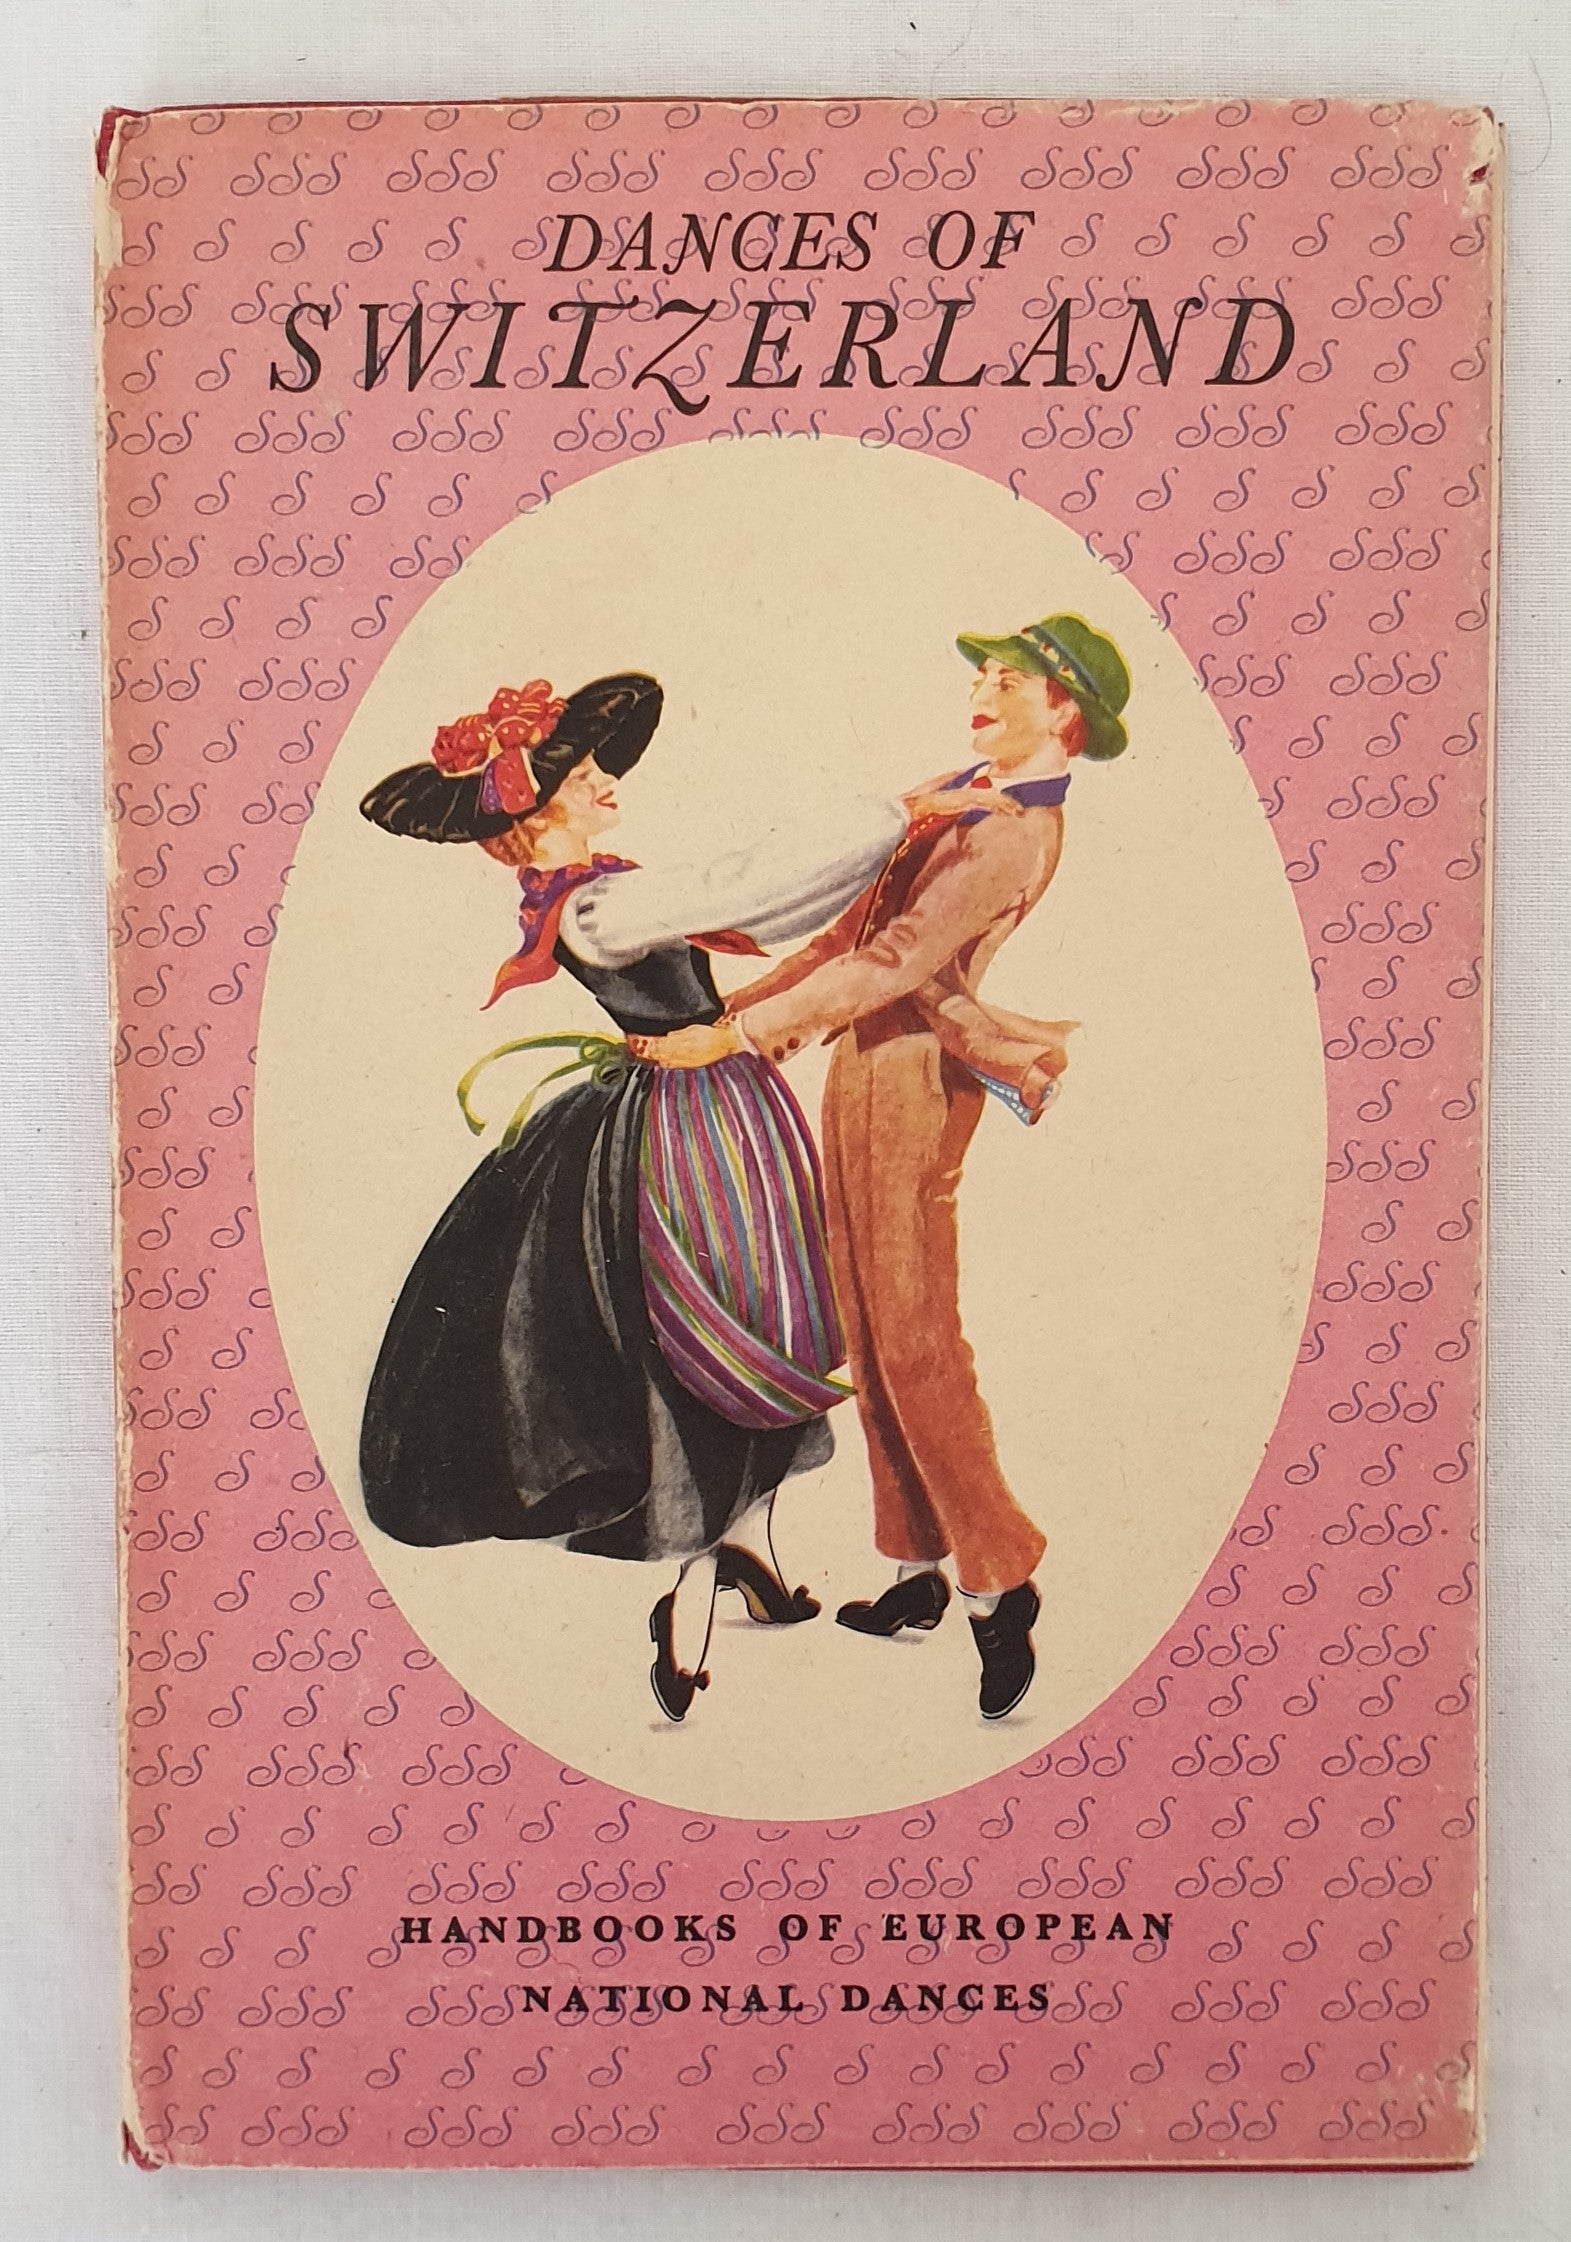 Dances of Switzerland by Louise Witzig